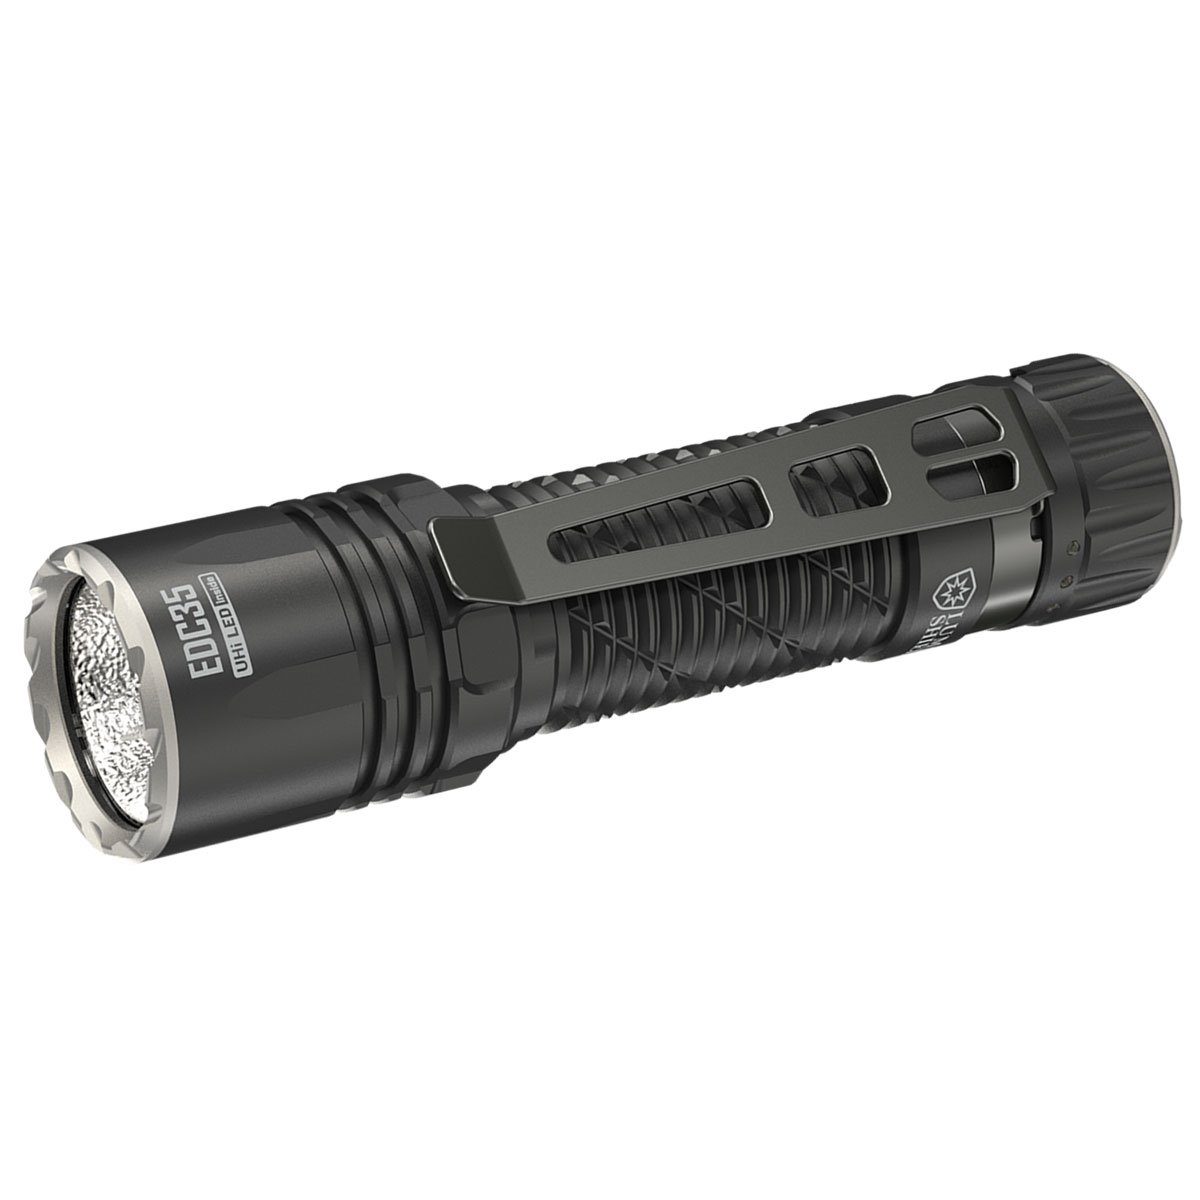 Nitecore LED Taschenlampe EDC35 5000 Lumen - LED-Taschenlampe